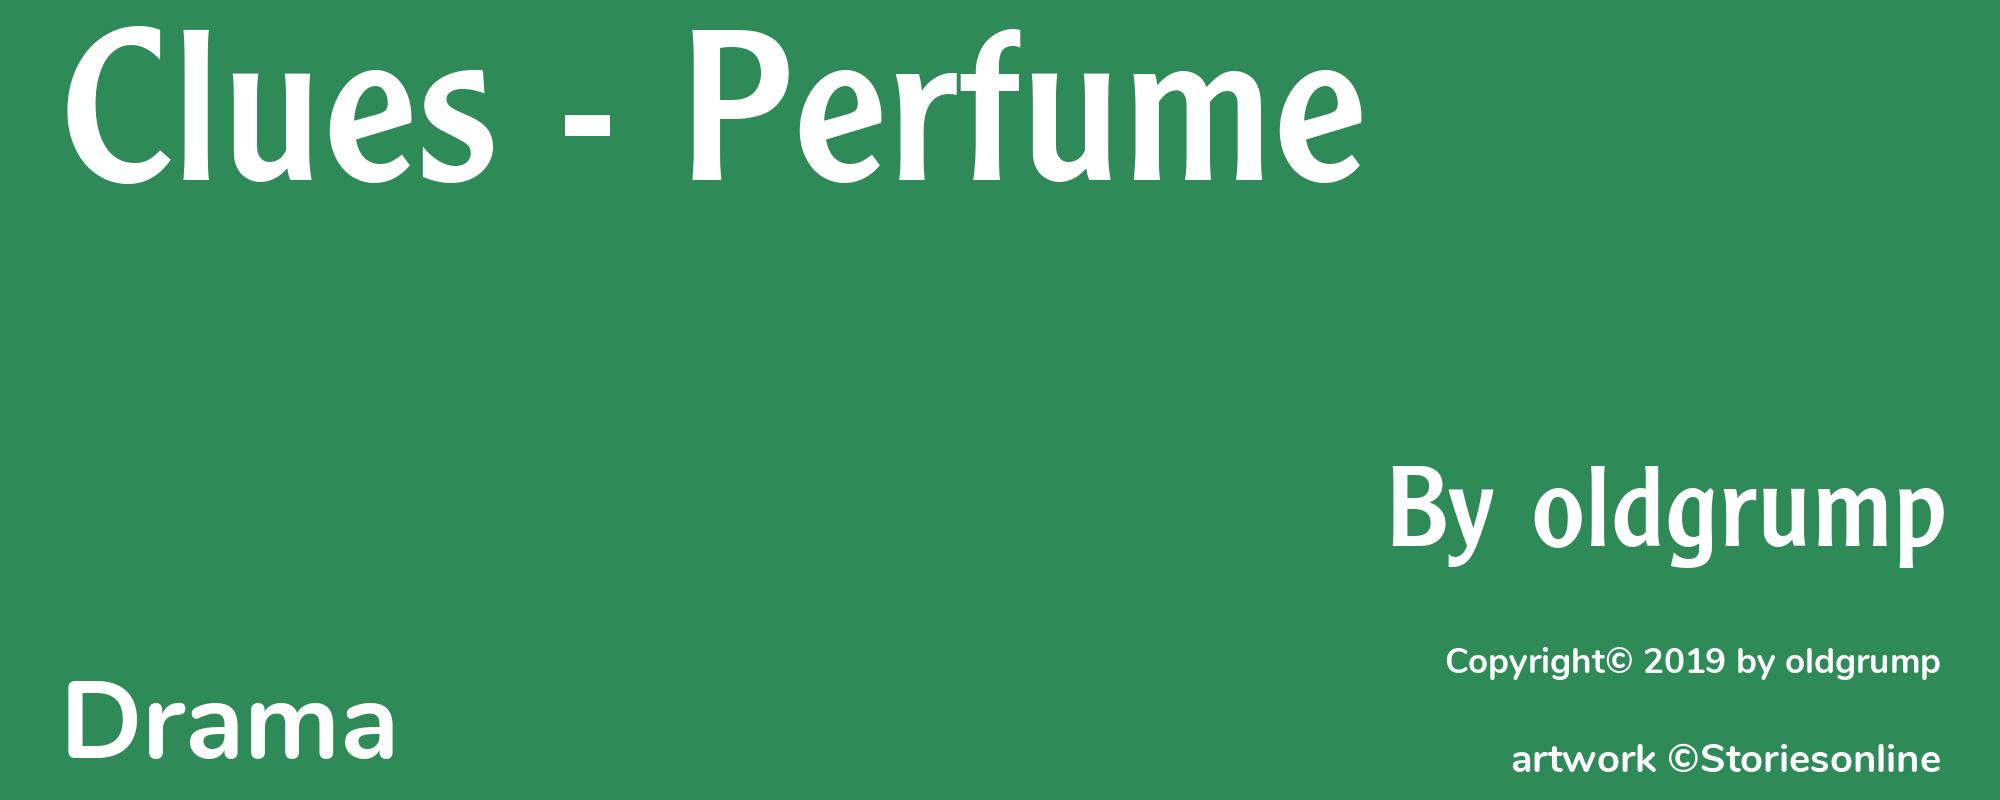 Clues - Perfume - Cover